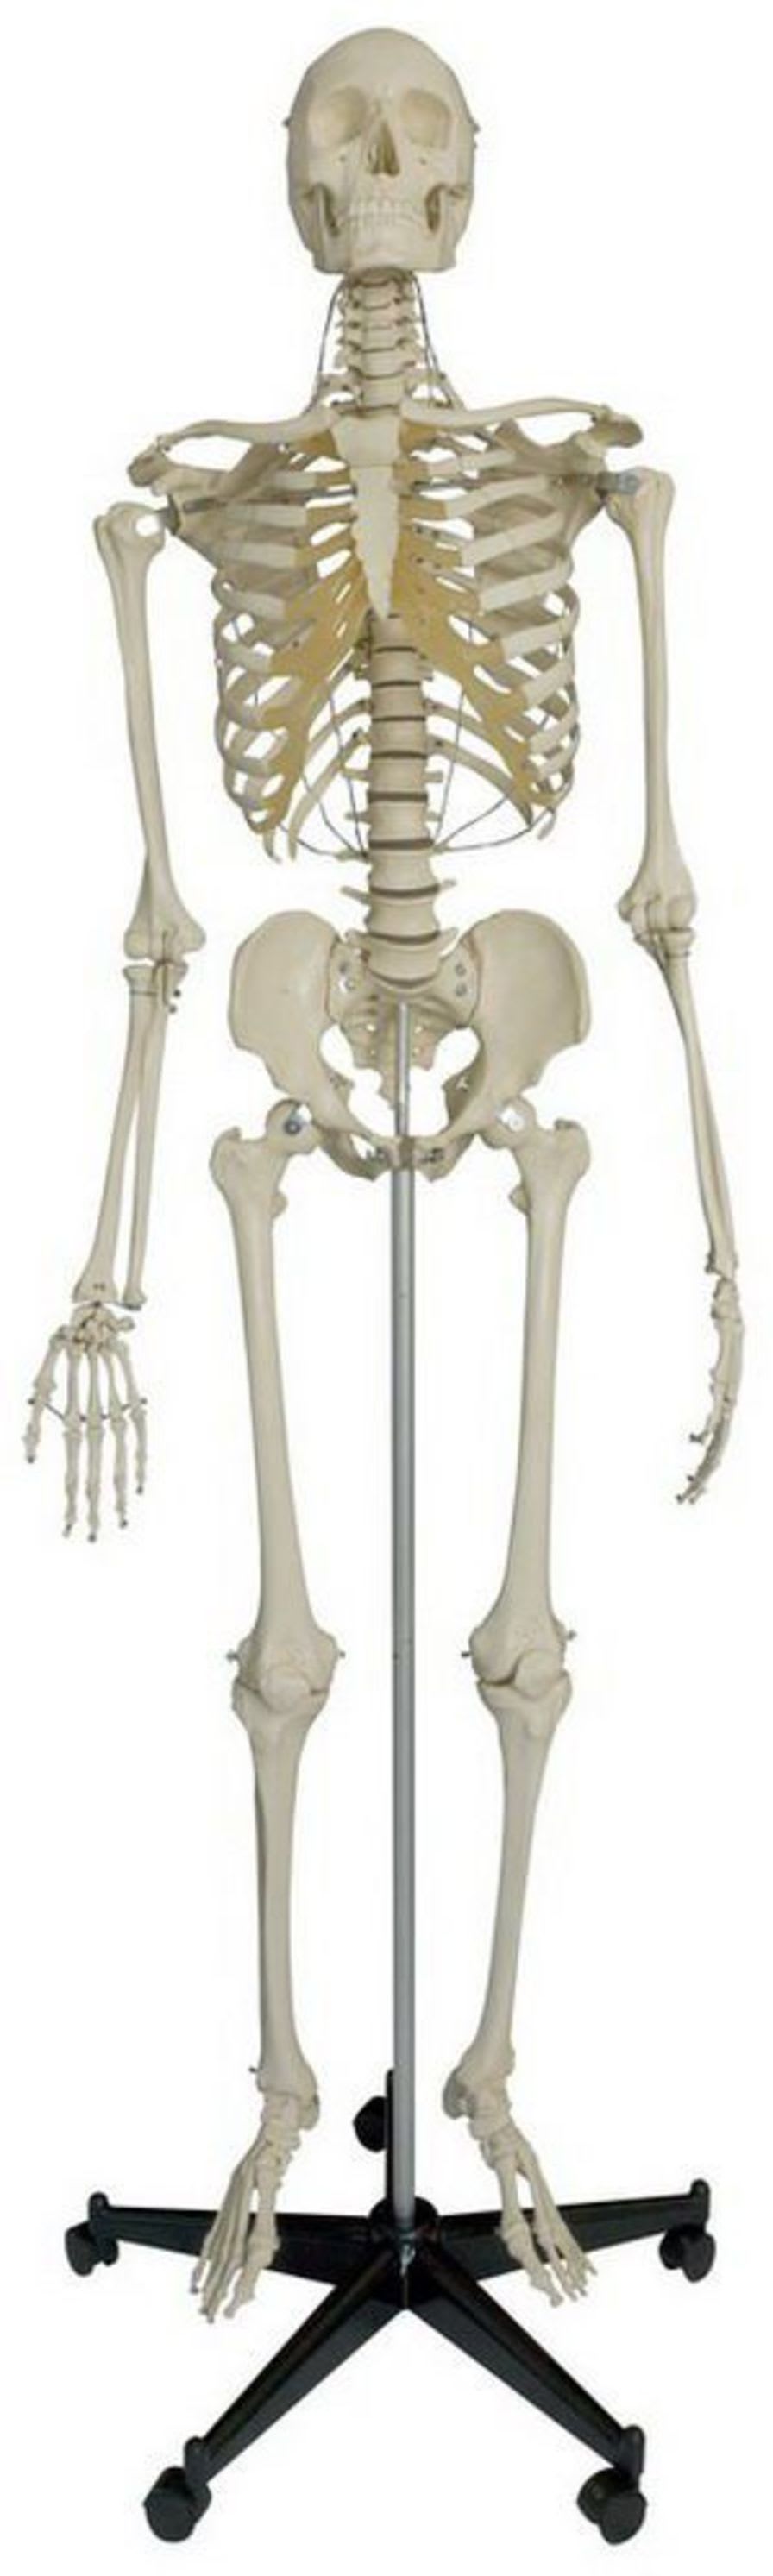 Skeleton anatomical model / articulated A205 RÜDIGER - ANATOMIE